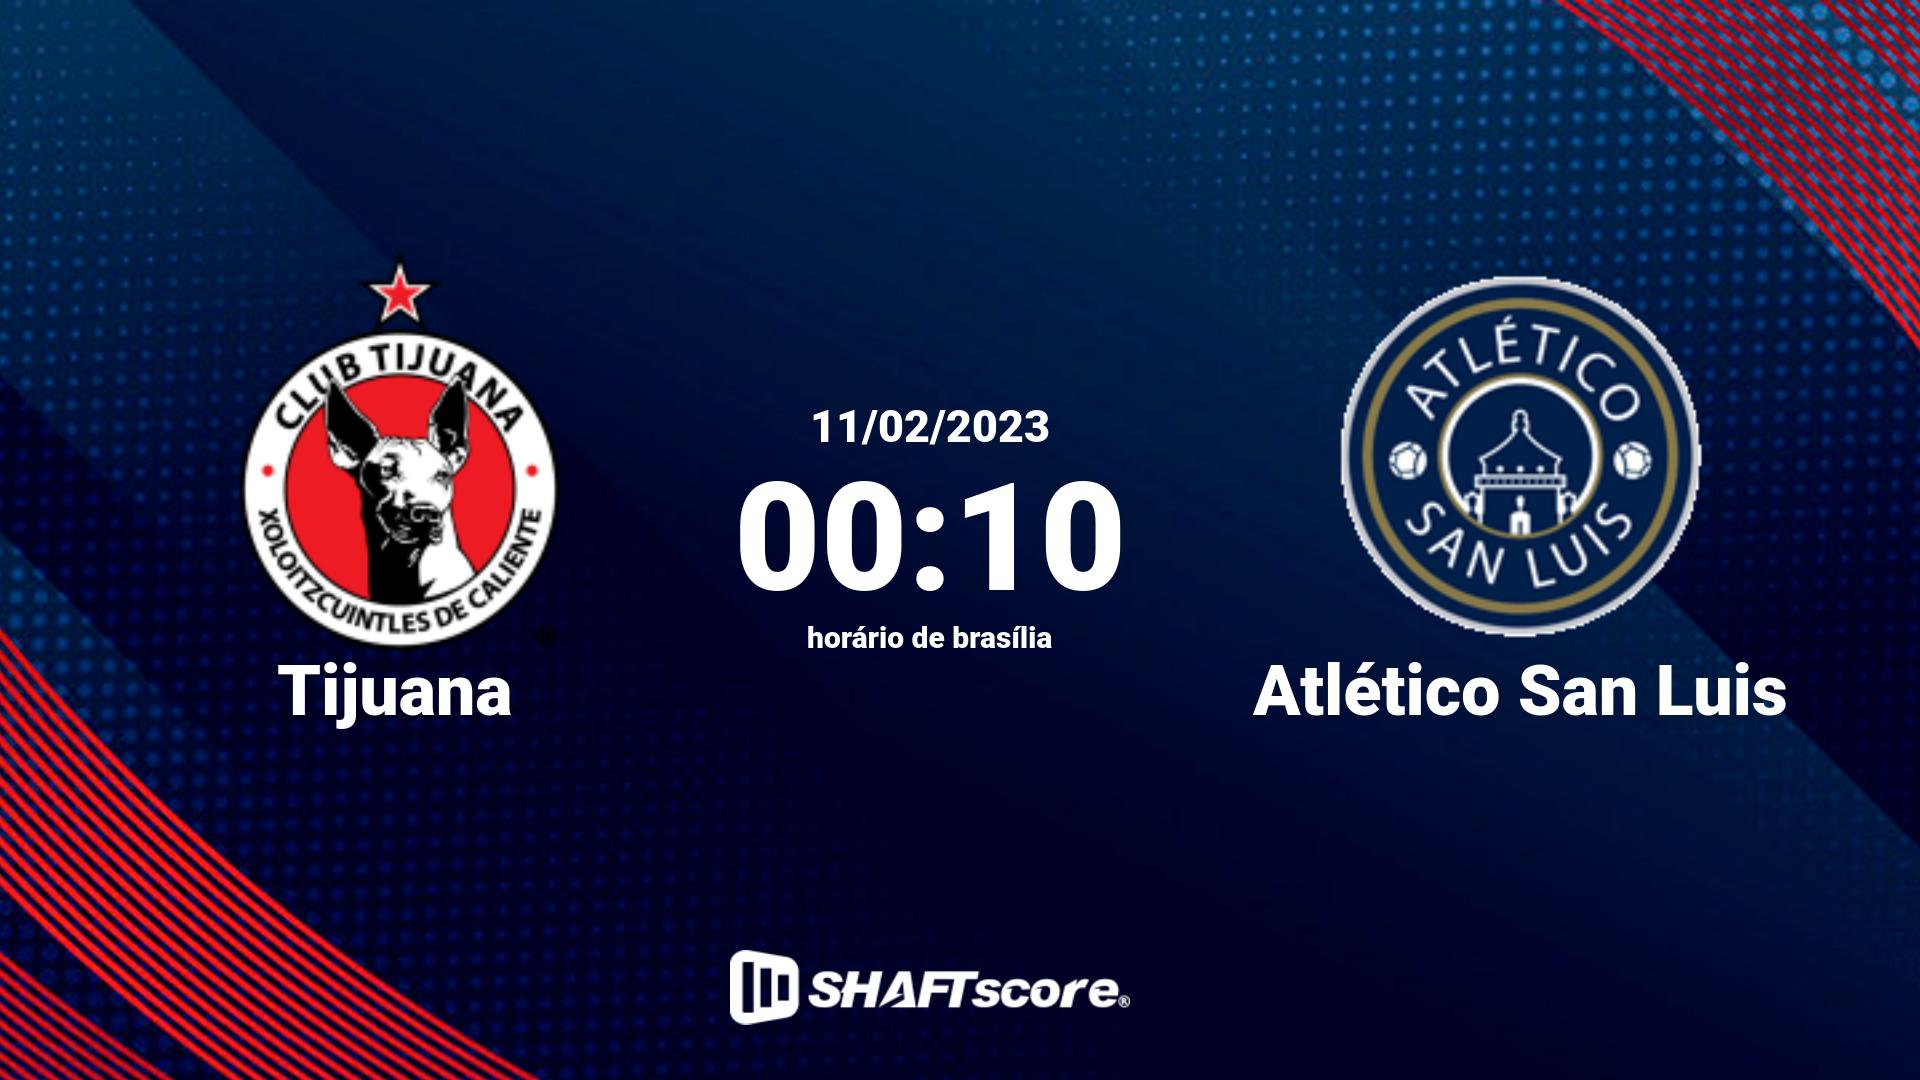 Estatísticas do jogo Tijuana vs Atlético San Luis 11.02 00:10